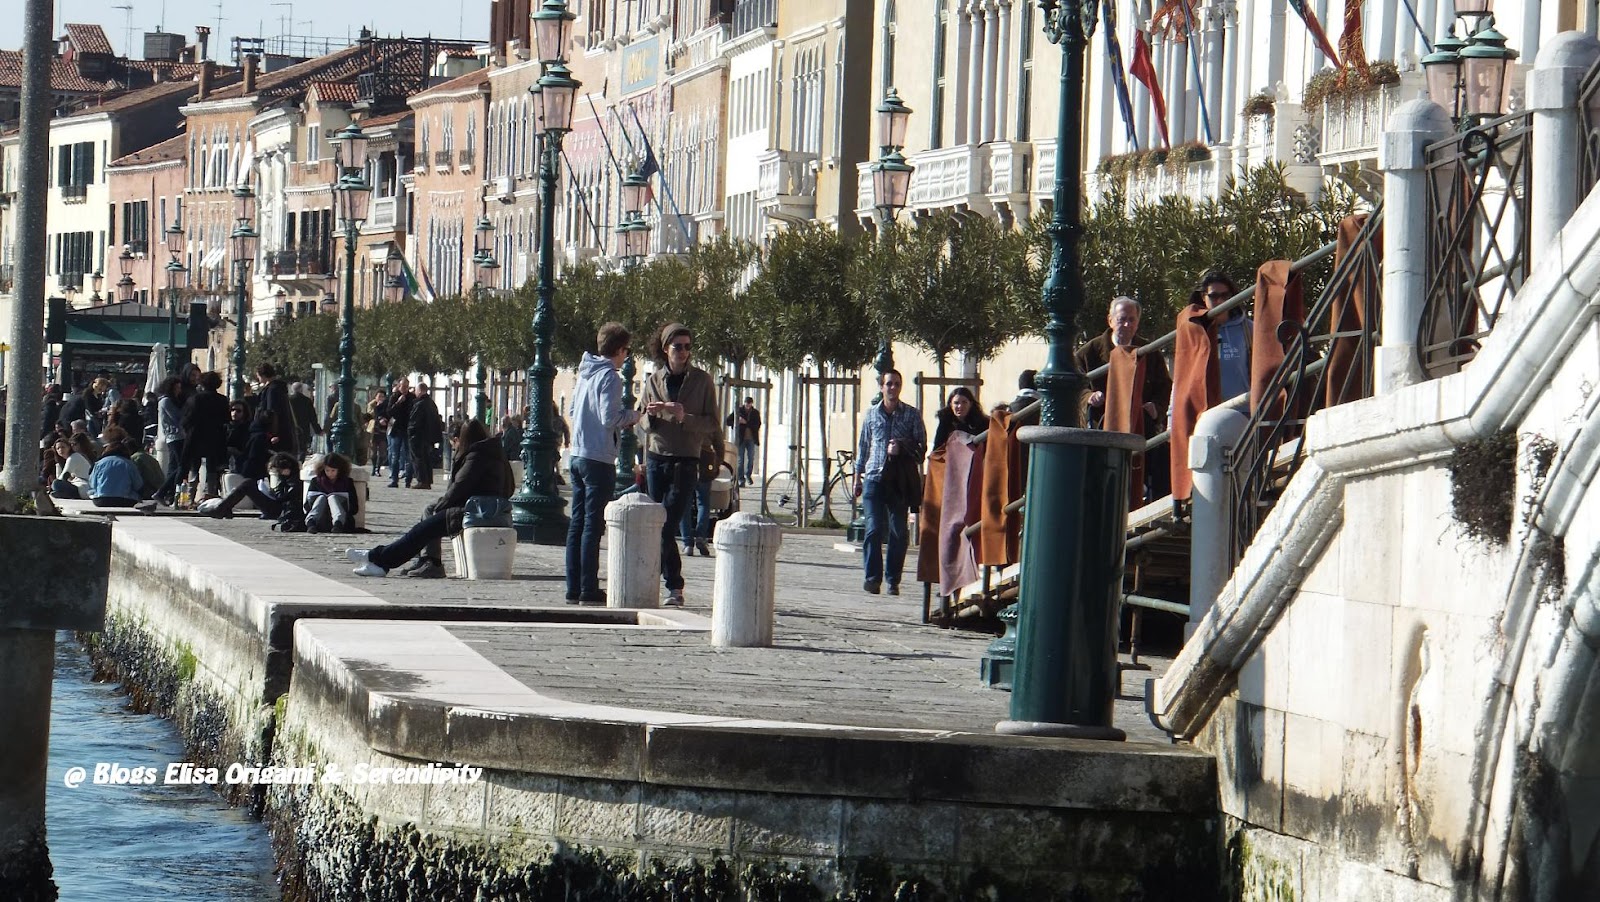 Fondamenta delle Zattere, Venecia, Italia, Elisa N, Blog de Viajes, Lifestyle, Travel